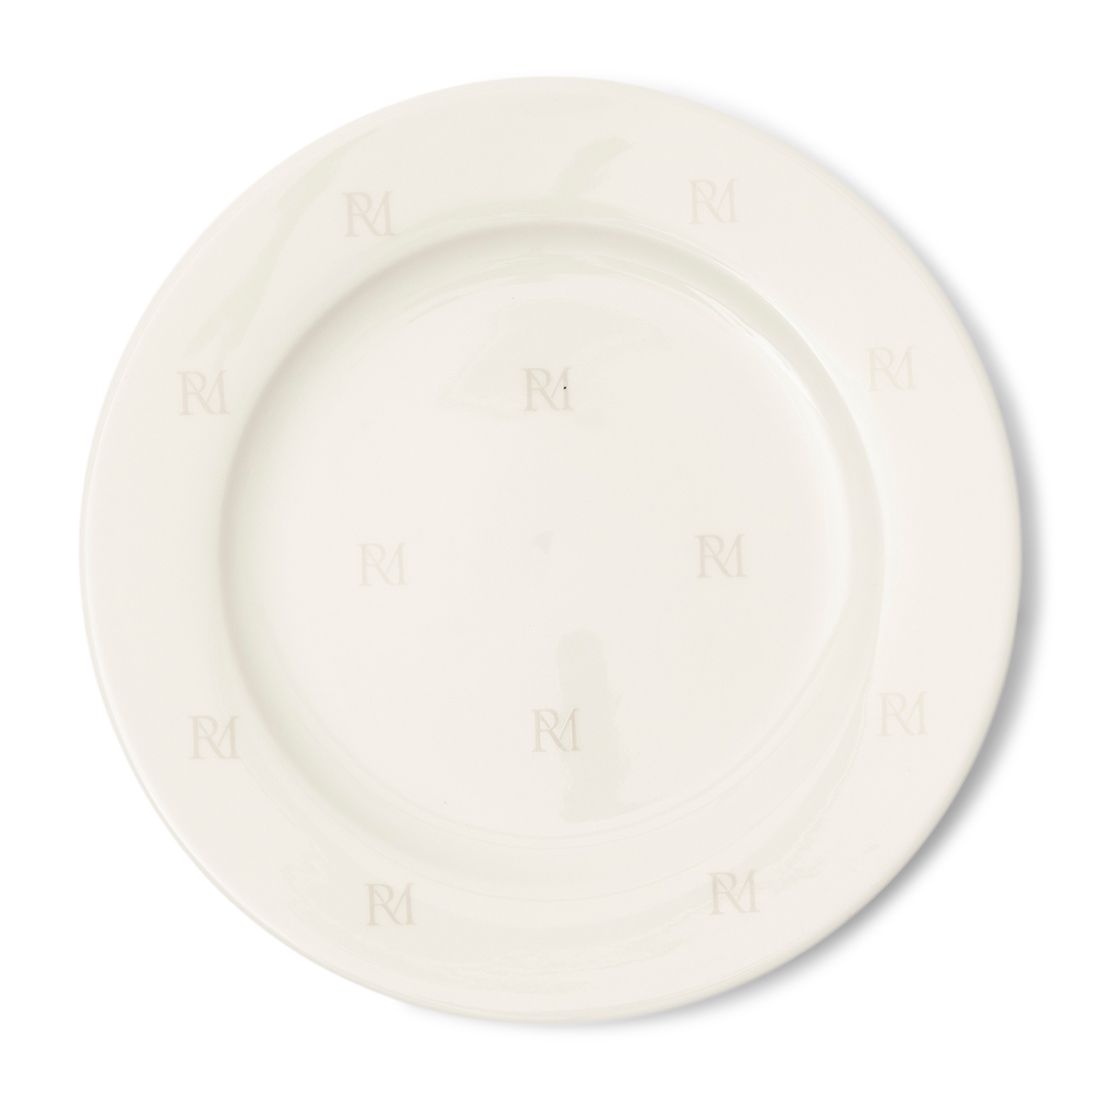 Riviera Maison Ontbijtbord met opdruk - RM Monogram Breakfast Plate - Wit